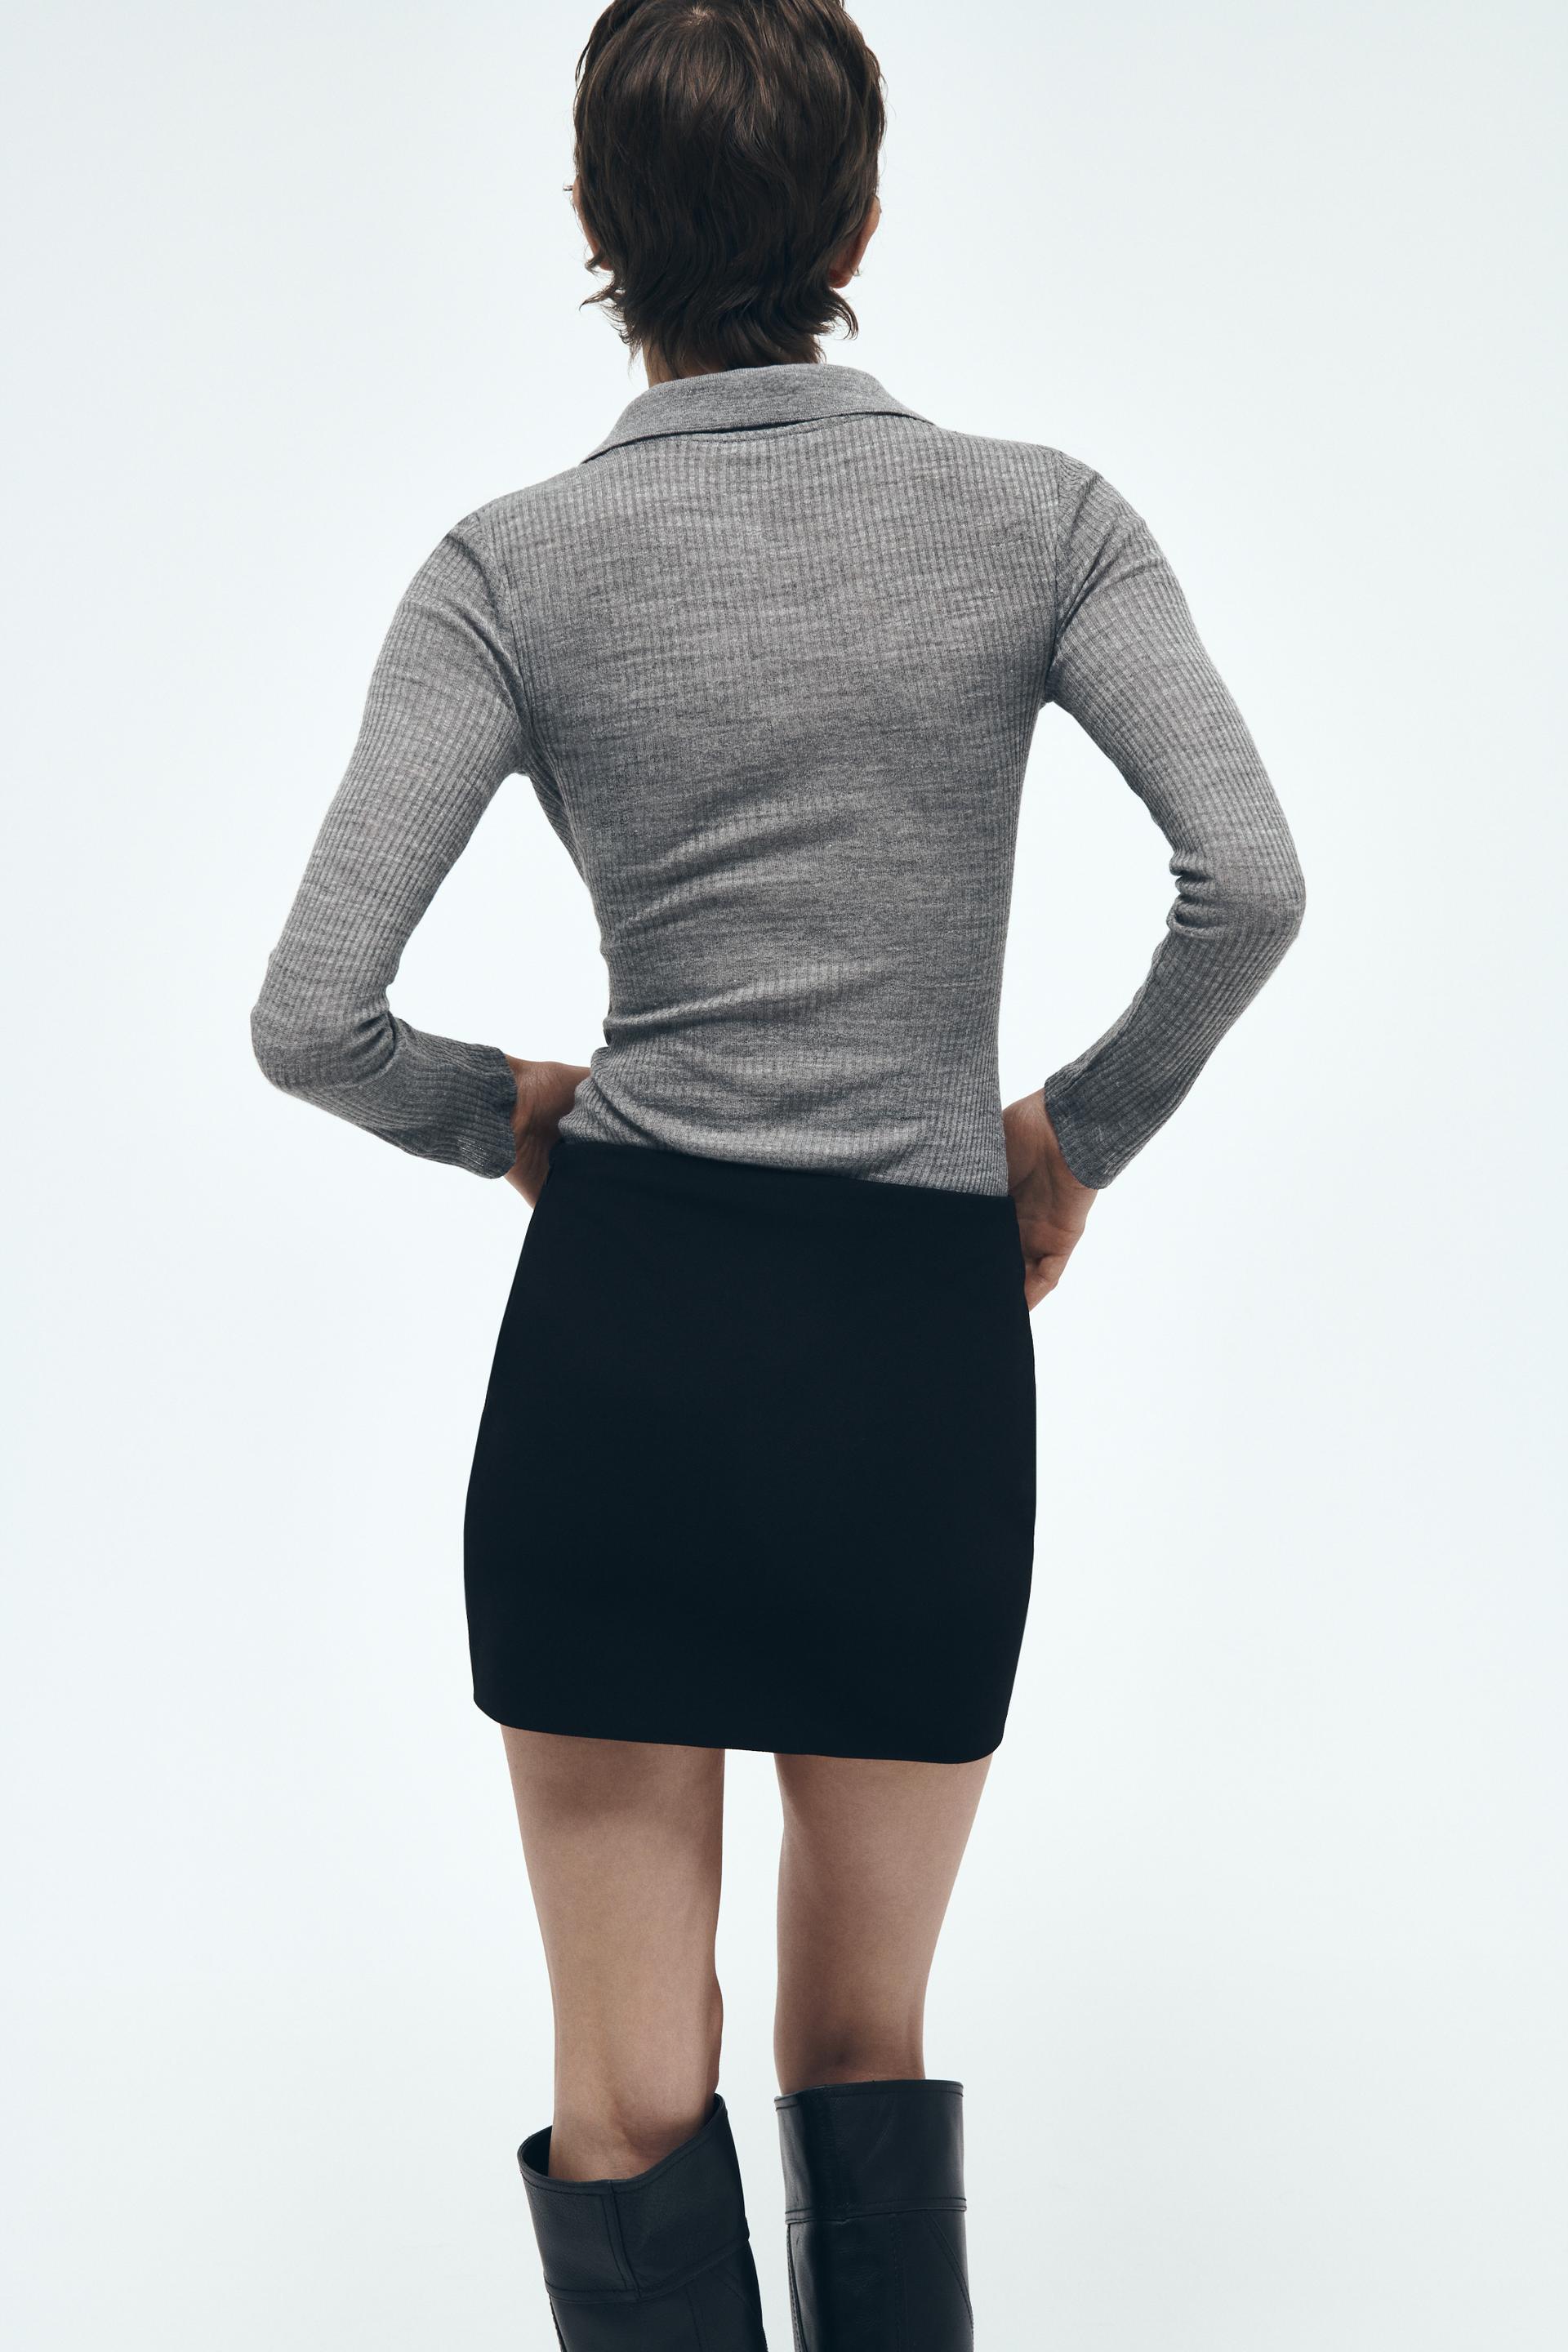 Shop ZARA 2020-21FW Short Pleated Skirts Plain Mini Skirts (4886/263) by  schwarzwald